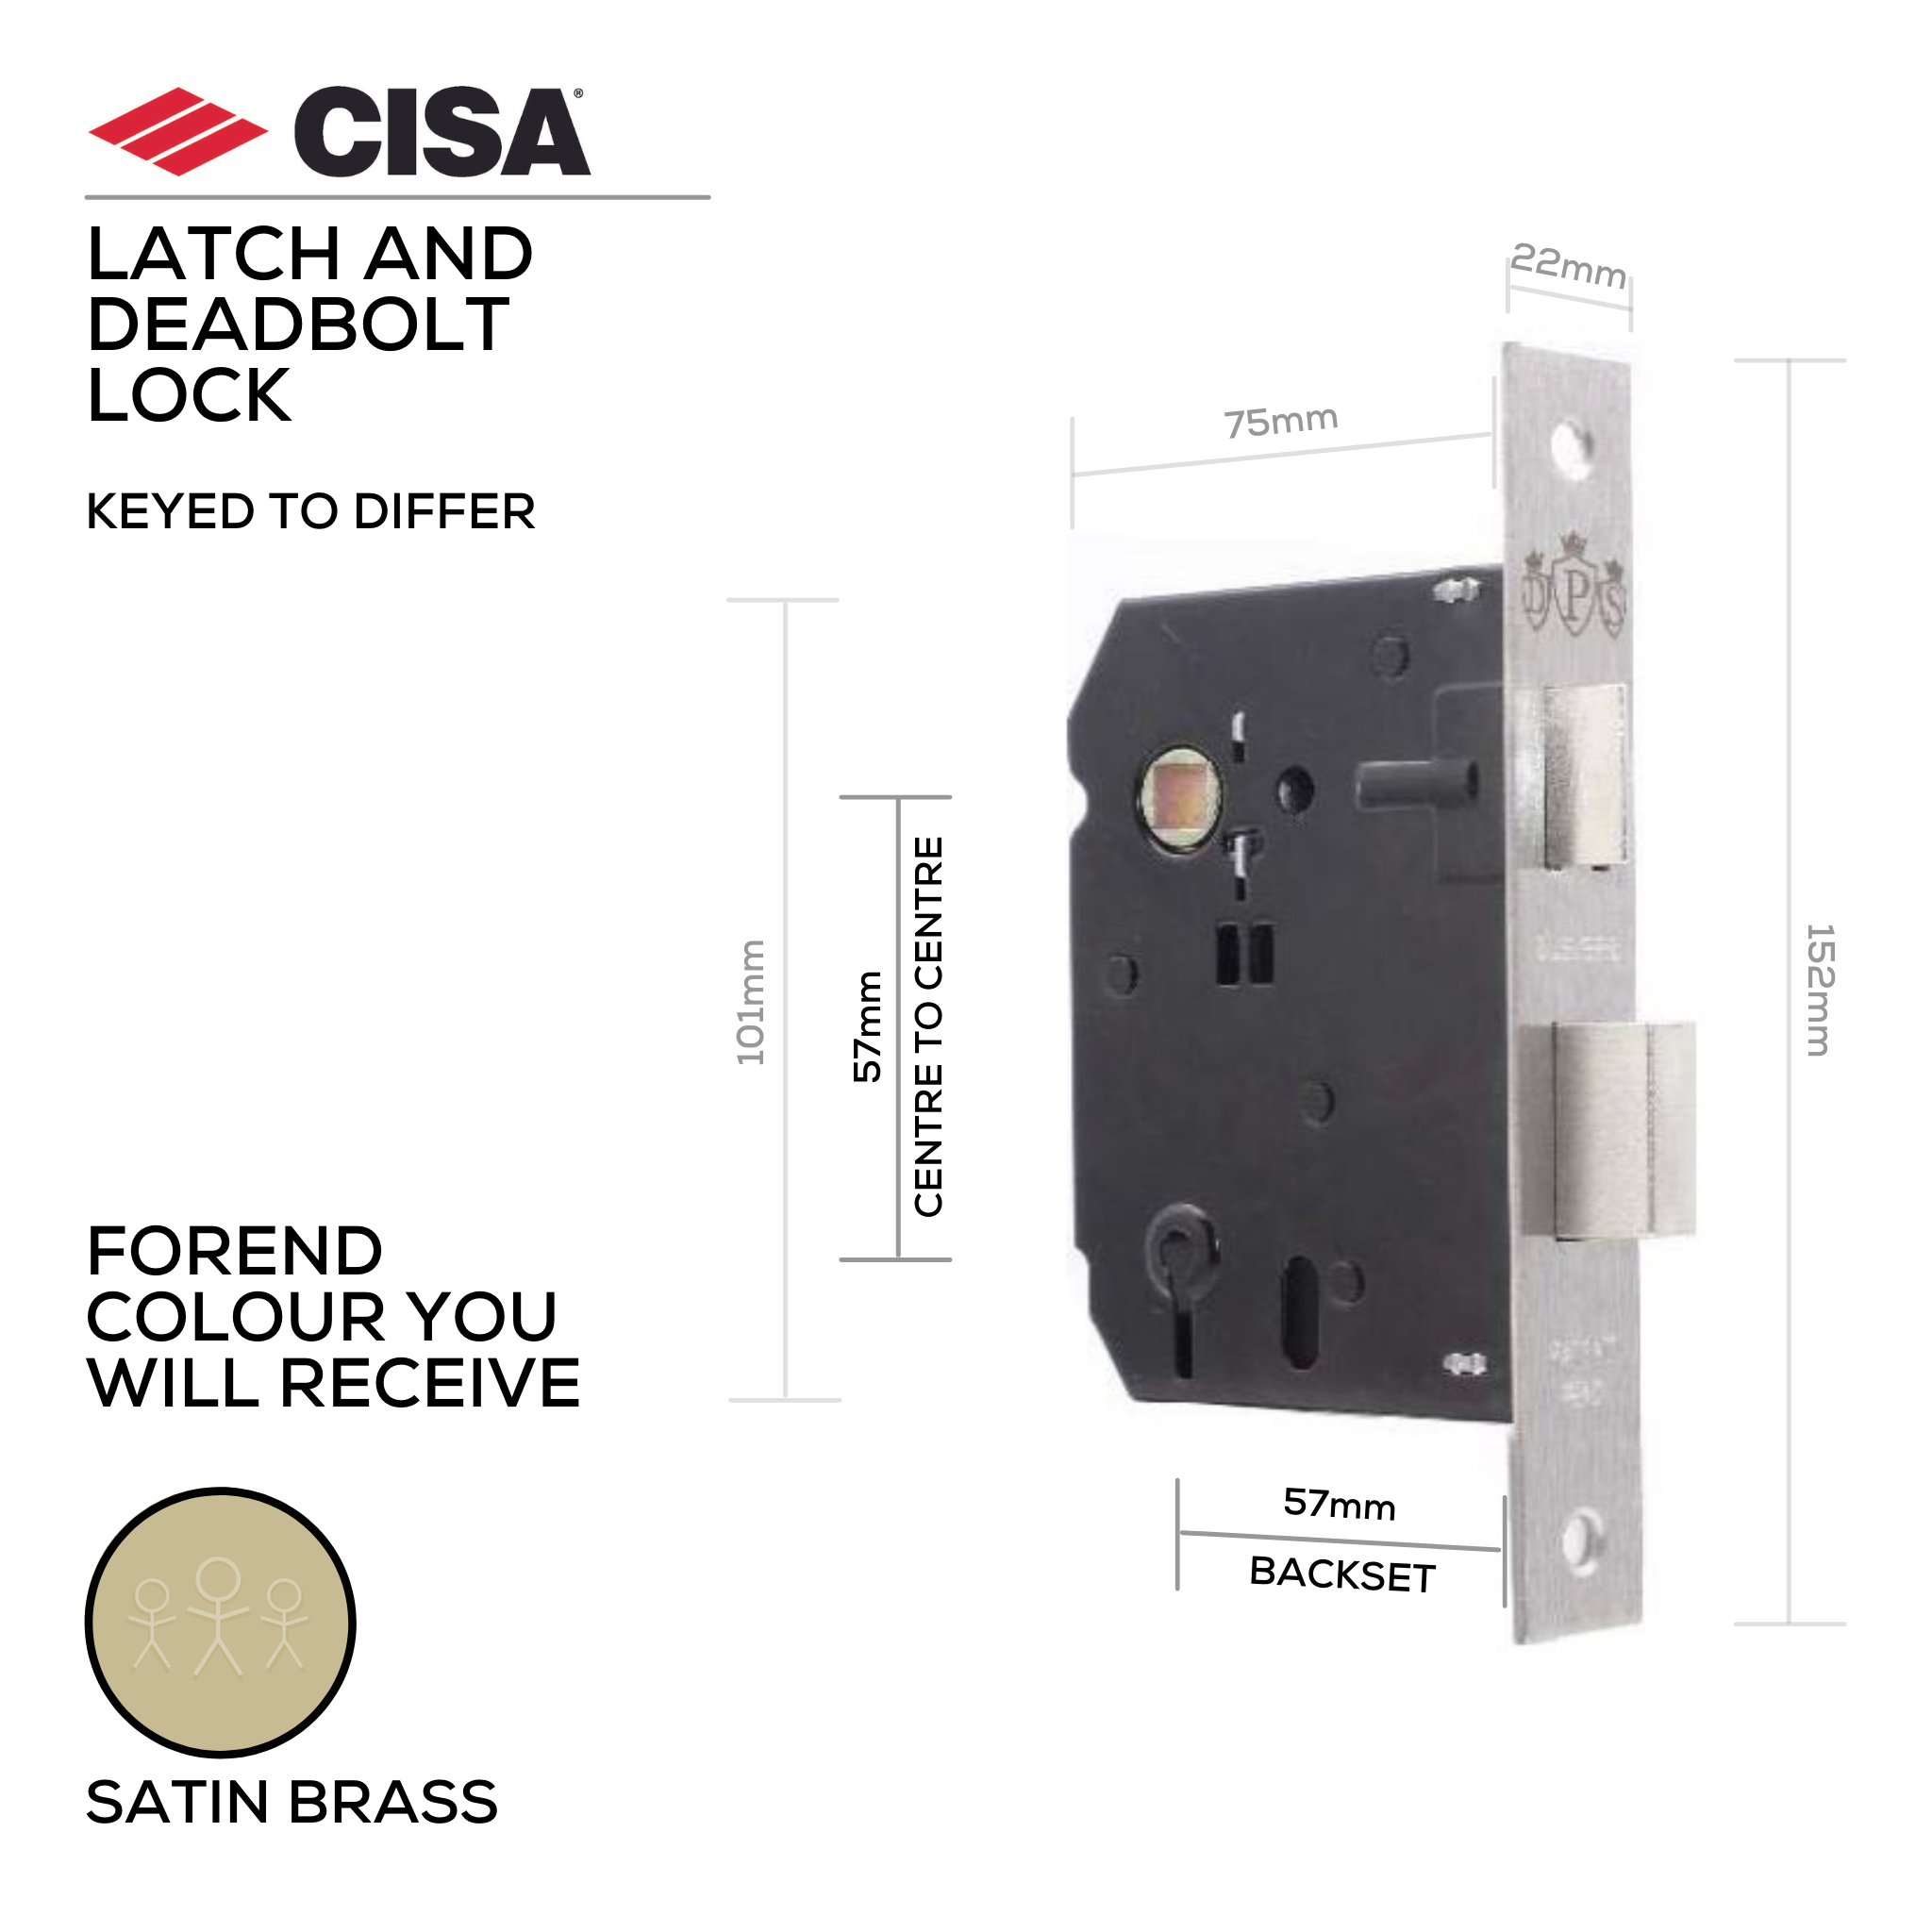 DPS3L-57-SB, Latch & Deadbolt Lock, Lever (Key), 3 Lever Lock, Keyed to Differ, 3 Keys, 57mm (Backset), 57mm (ctc), Satin Brass, CISA